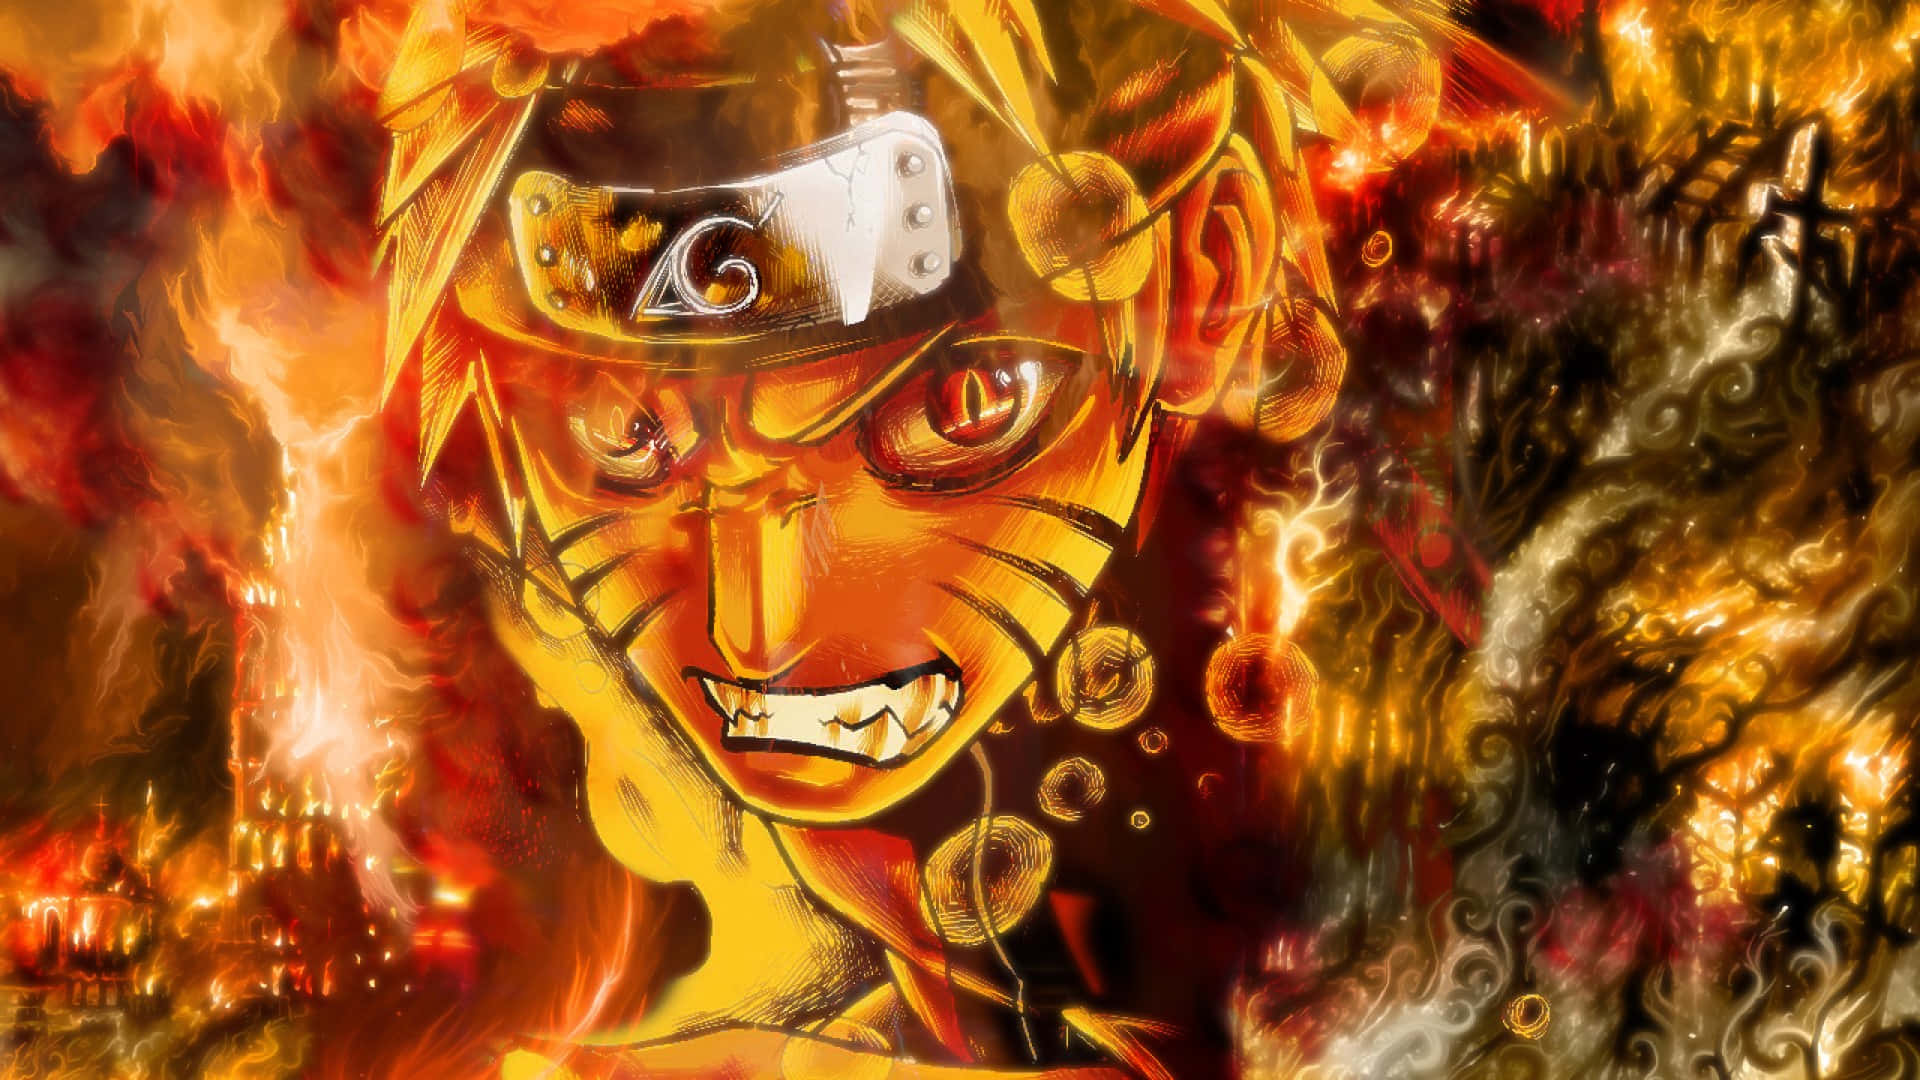 Narutobaggrunde - Naruto Baggrunde Wallpaper